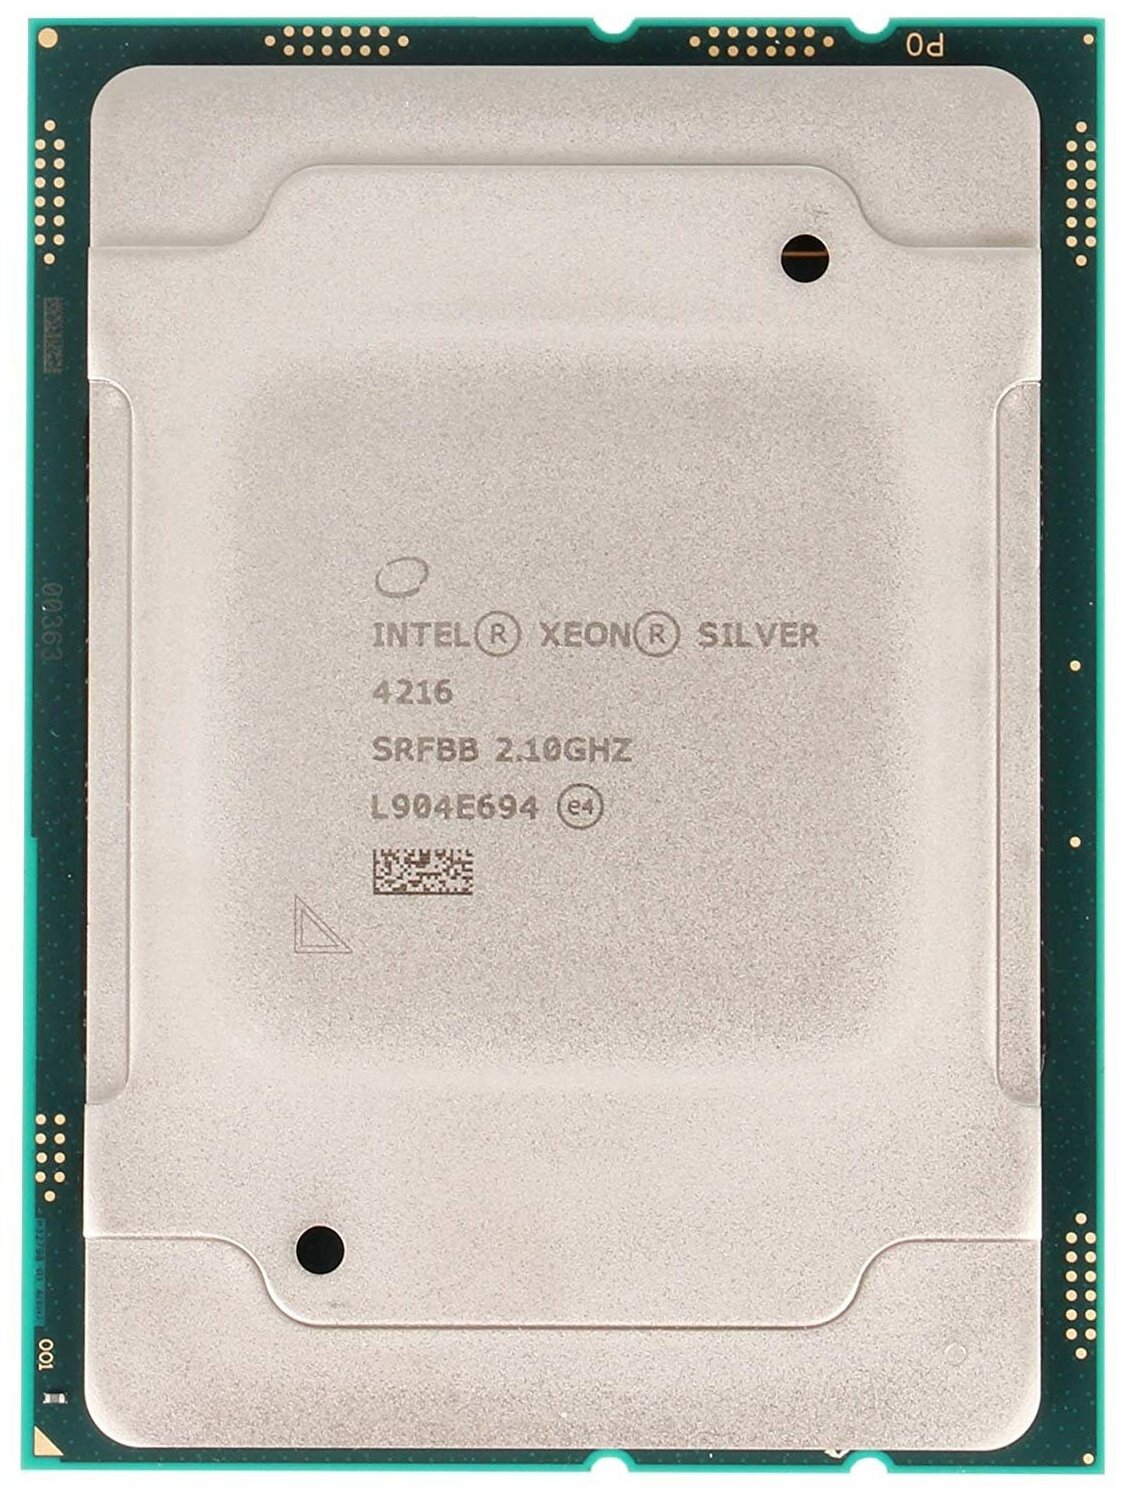 Intel Xeon Silver 4216 Processor (2.1GHz, 16C, 22M, 9,6 GT/s, 100W, Turbo, HT) DDR4 2400- Kit